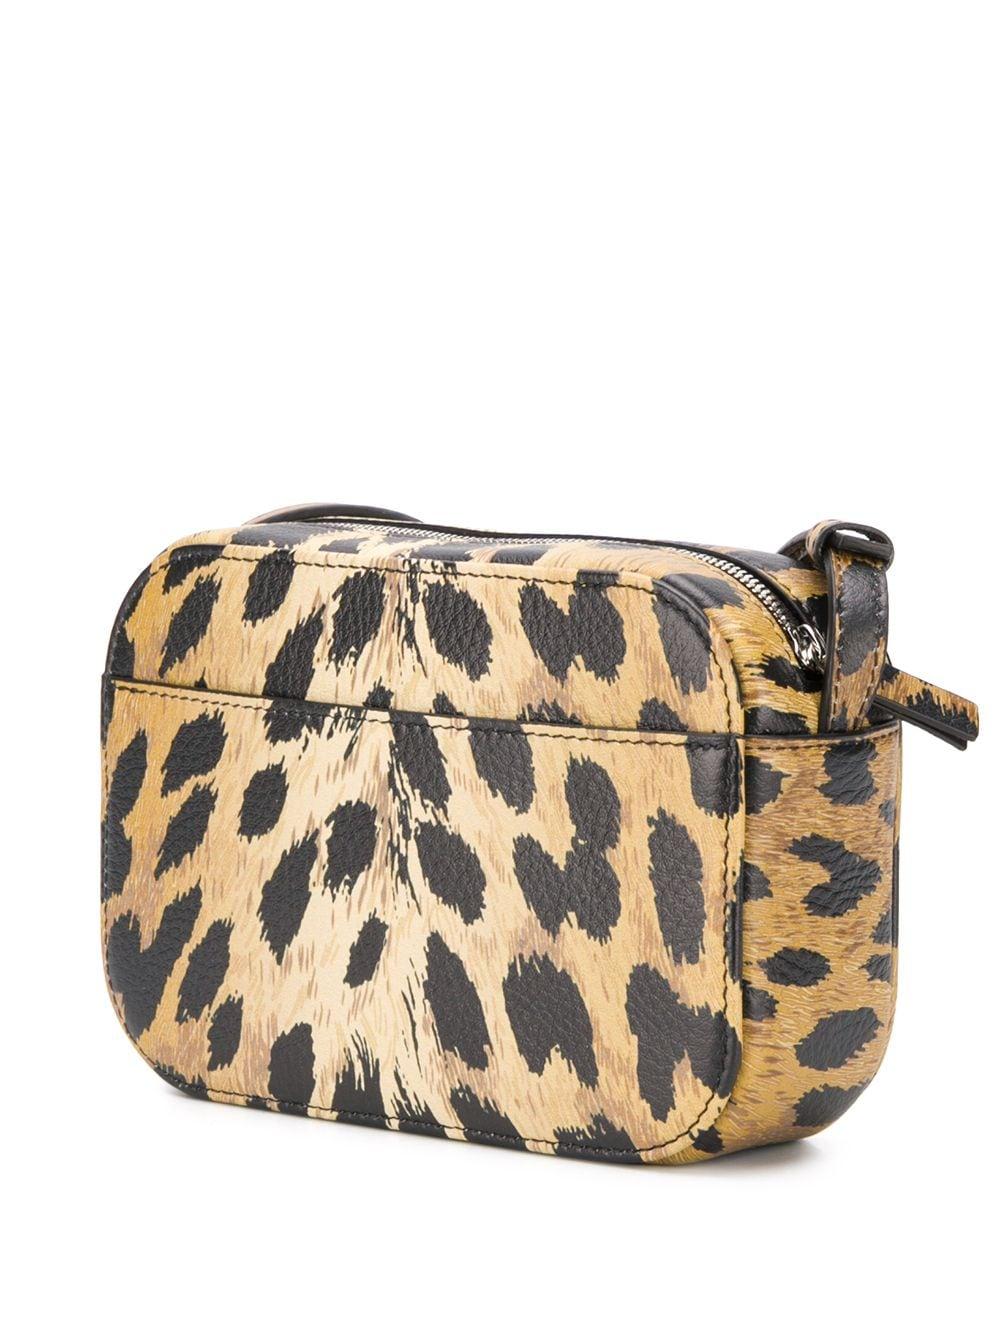 Balenciaga Calfskin Logo Printed Leopard XS Everyday Camera Bag